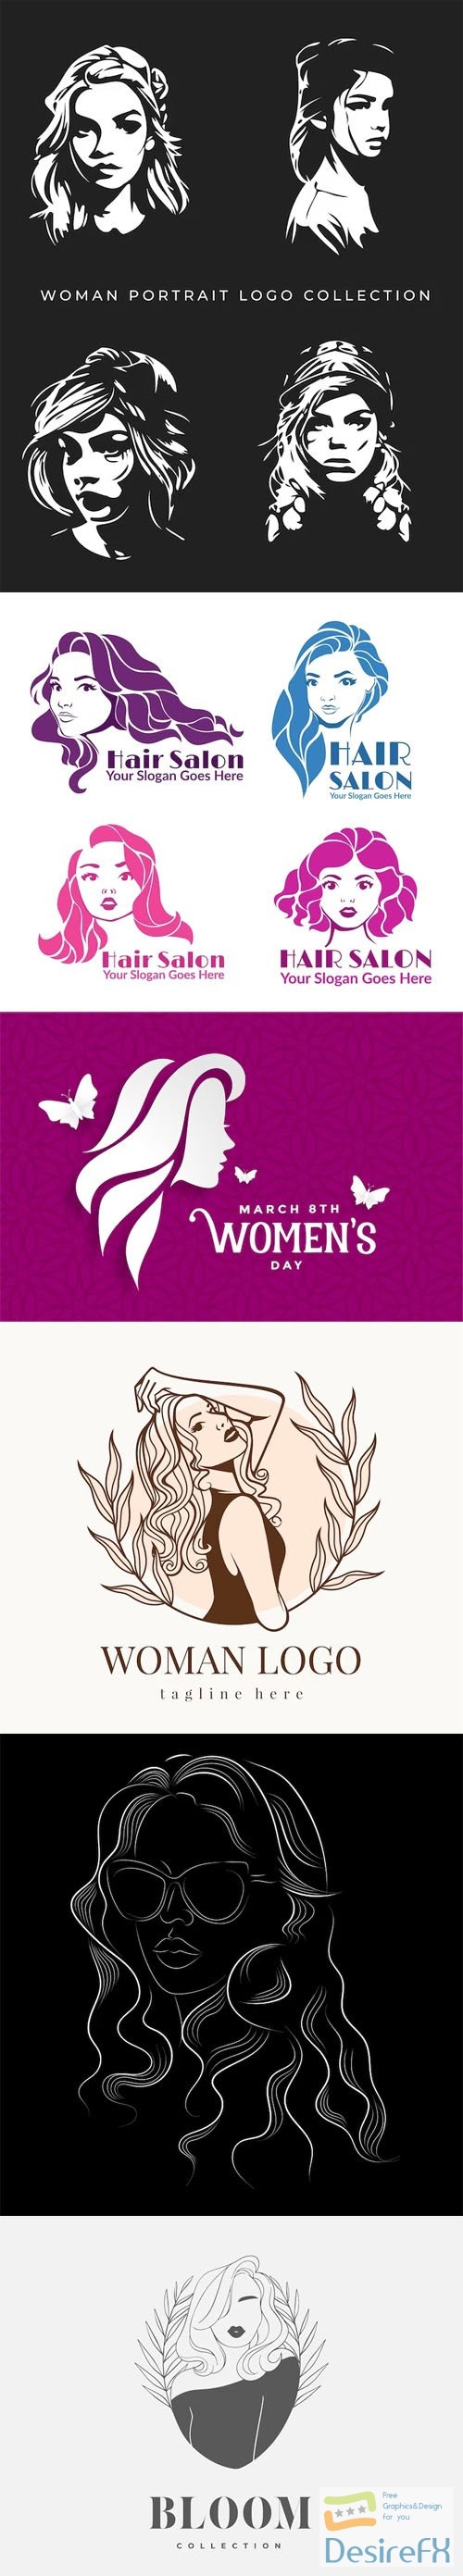 Woman Portrait Logos - Vector Design Templates Collection